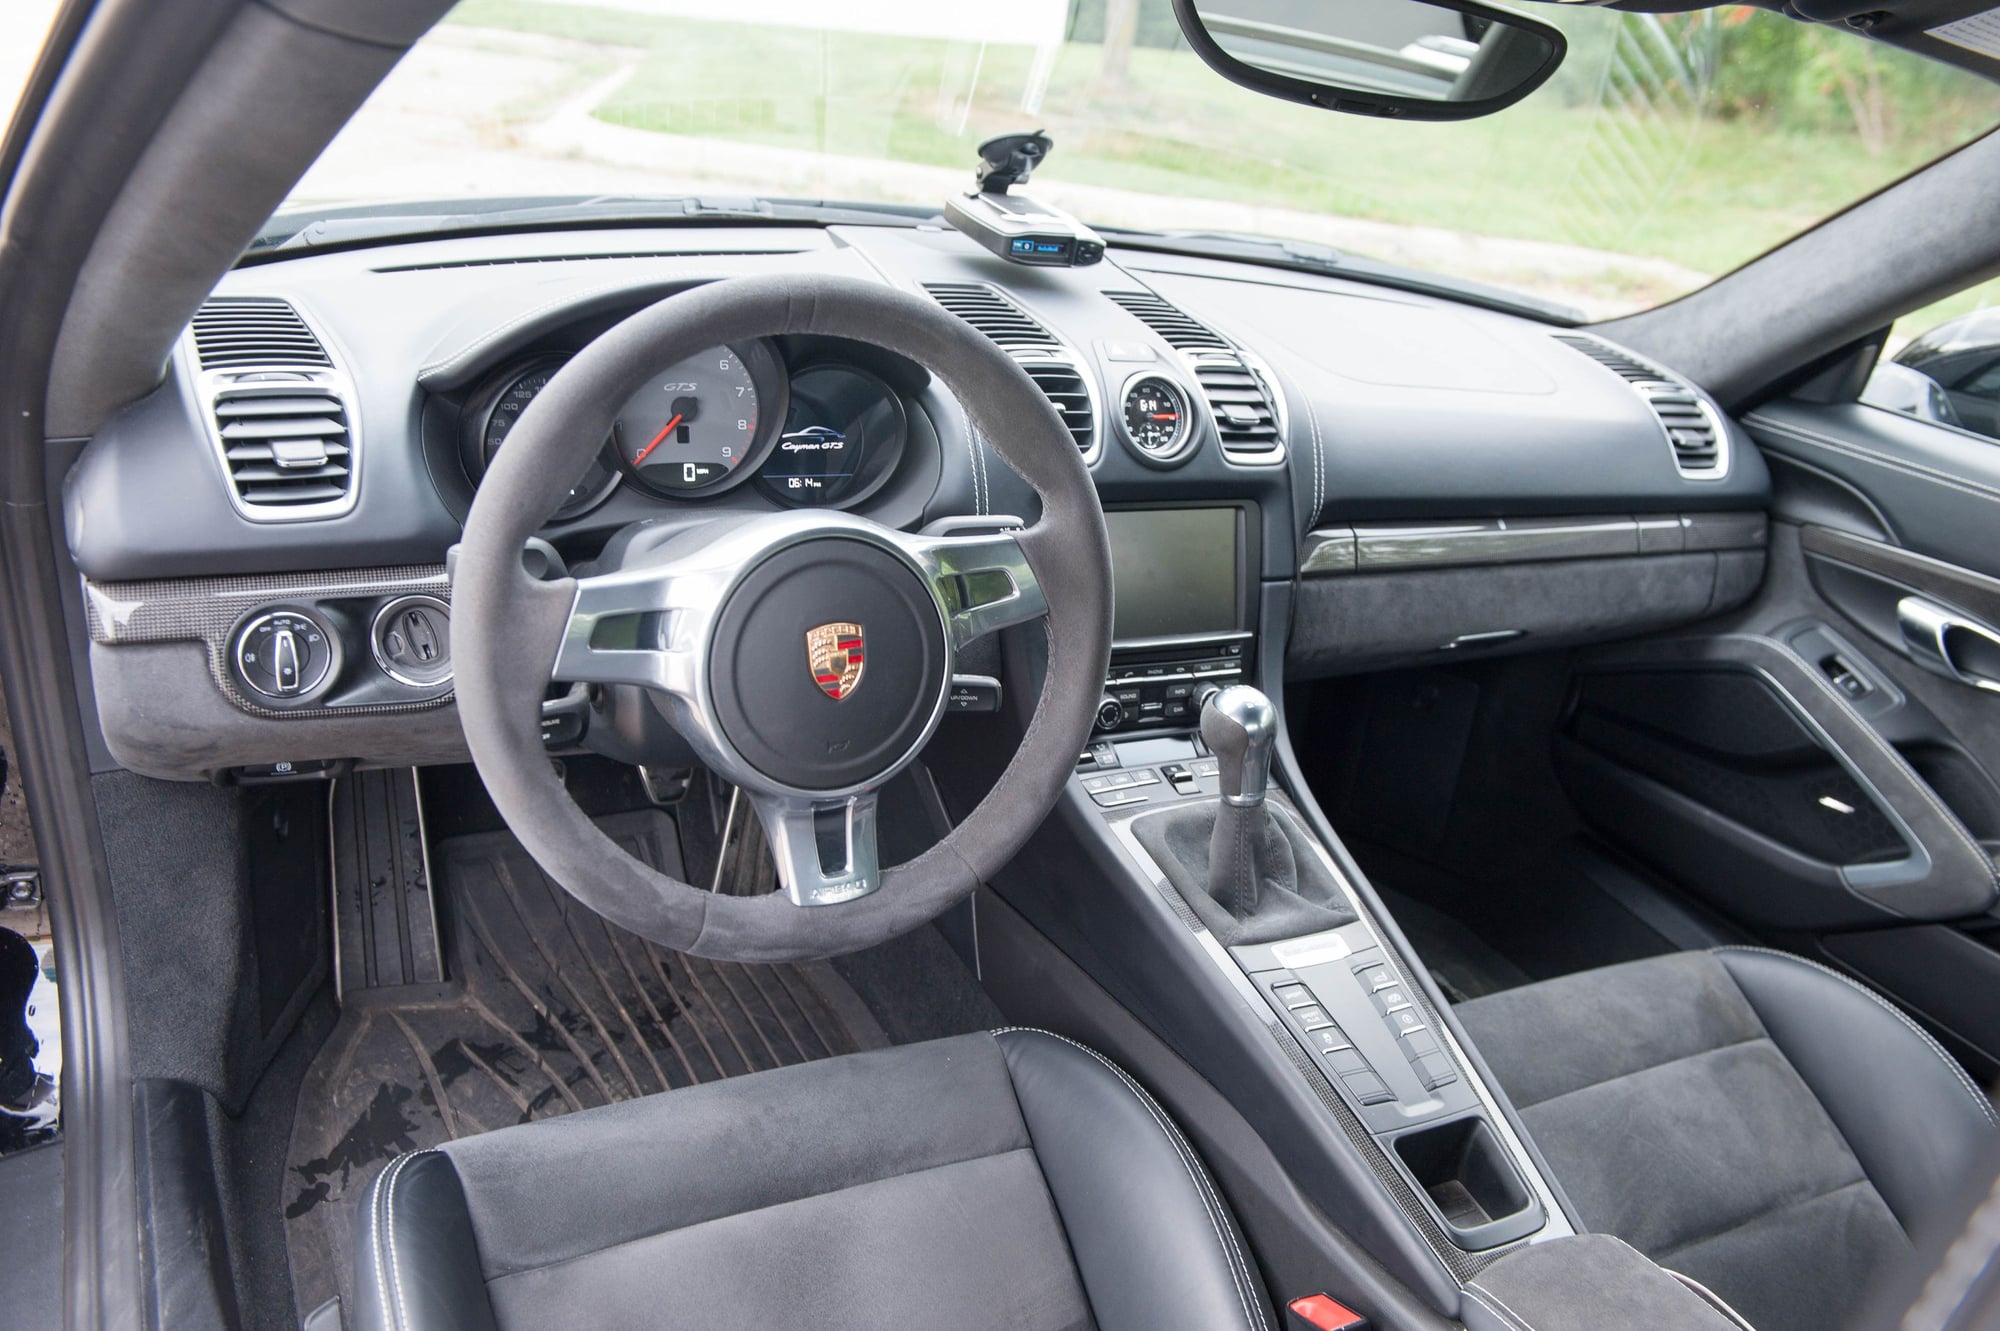 2015 Porsche Cayman - 2015 Porsche Cayman GTS 6 speed Manual - Used - VIN WP0AB2A89FK181613 - 31,000 Miles - 6 cyl - 2WD - Manual - Coupe - Black - Novi, MI 48375, United States